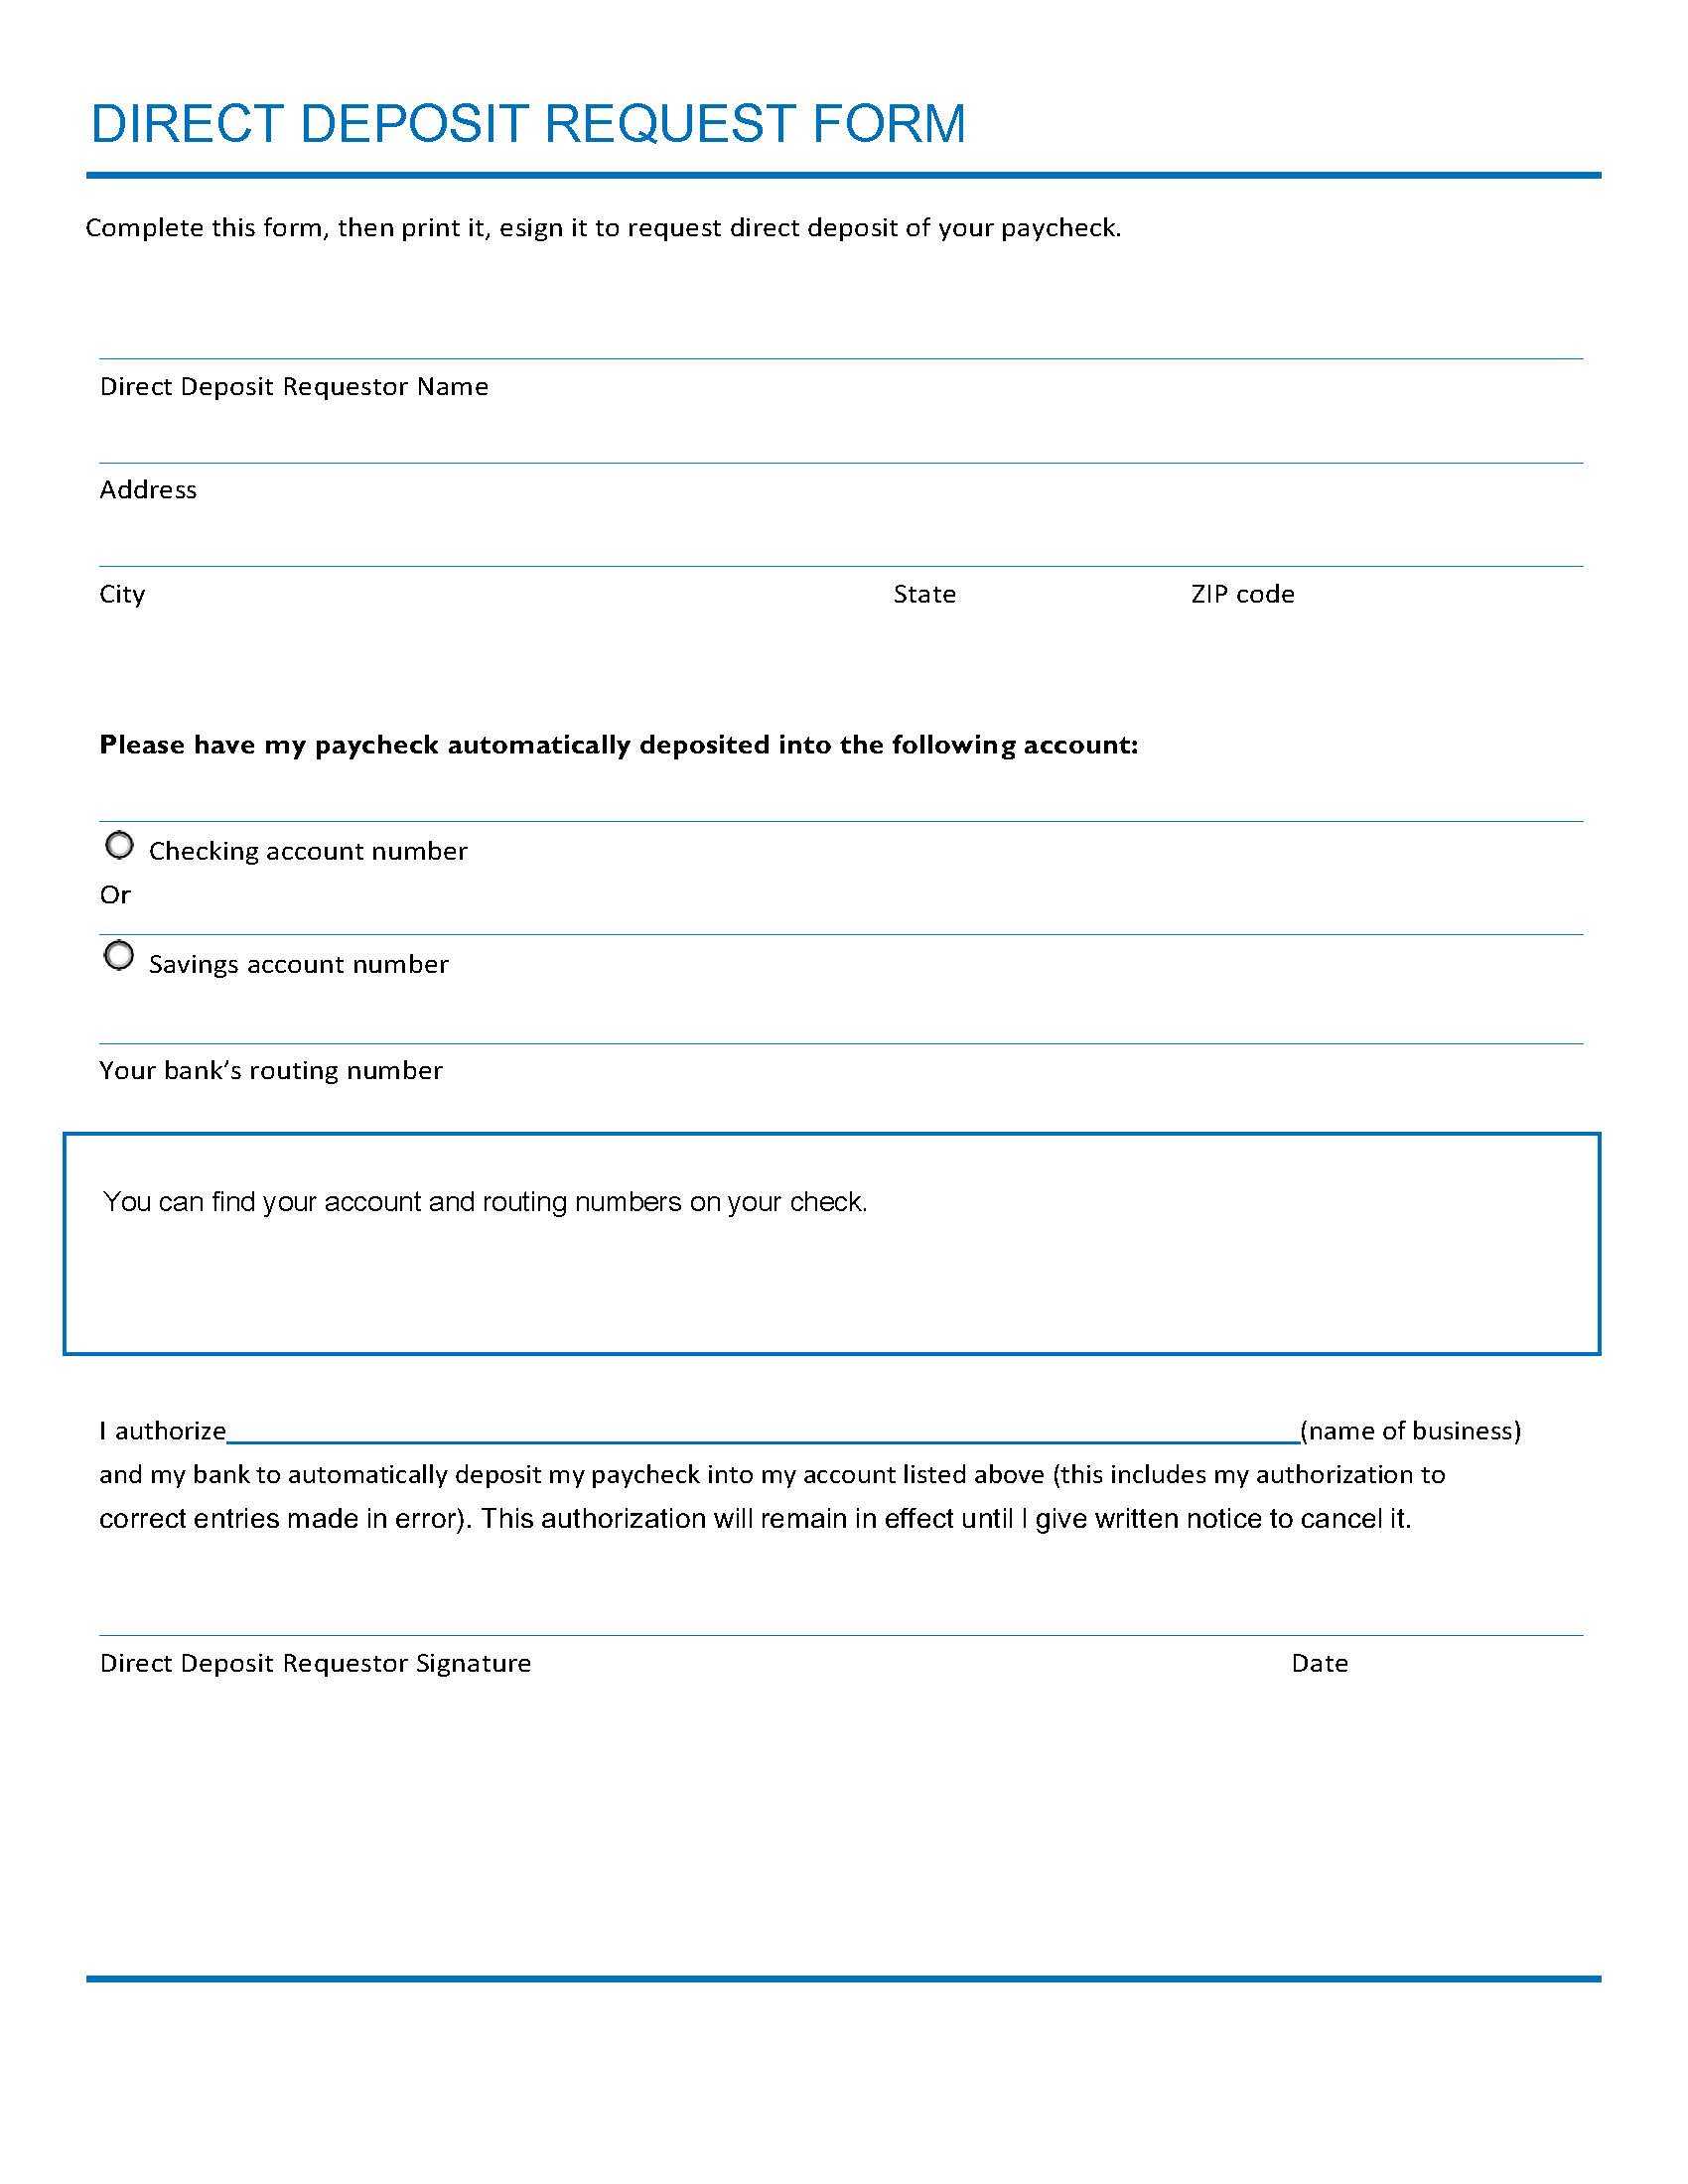 Employee Direct Deposit Enrollment Form Template